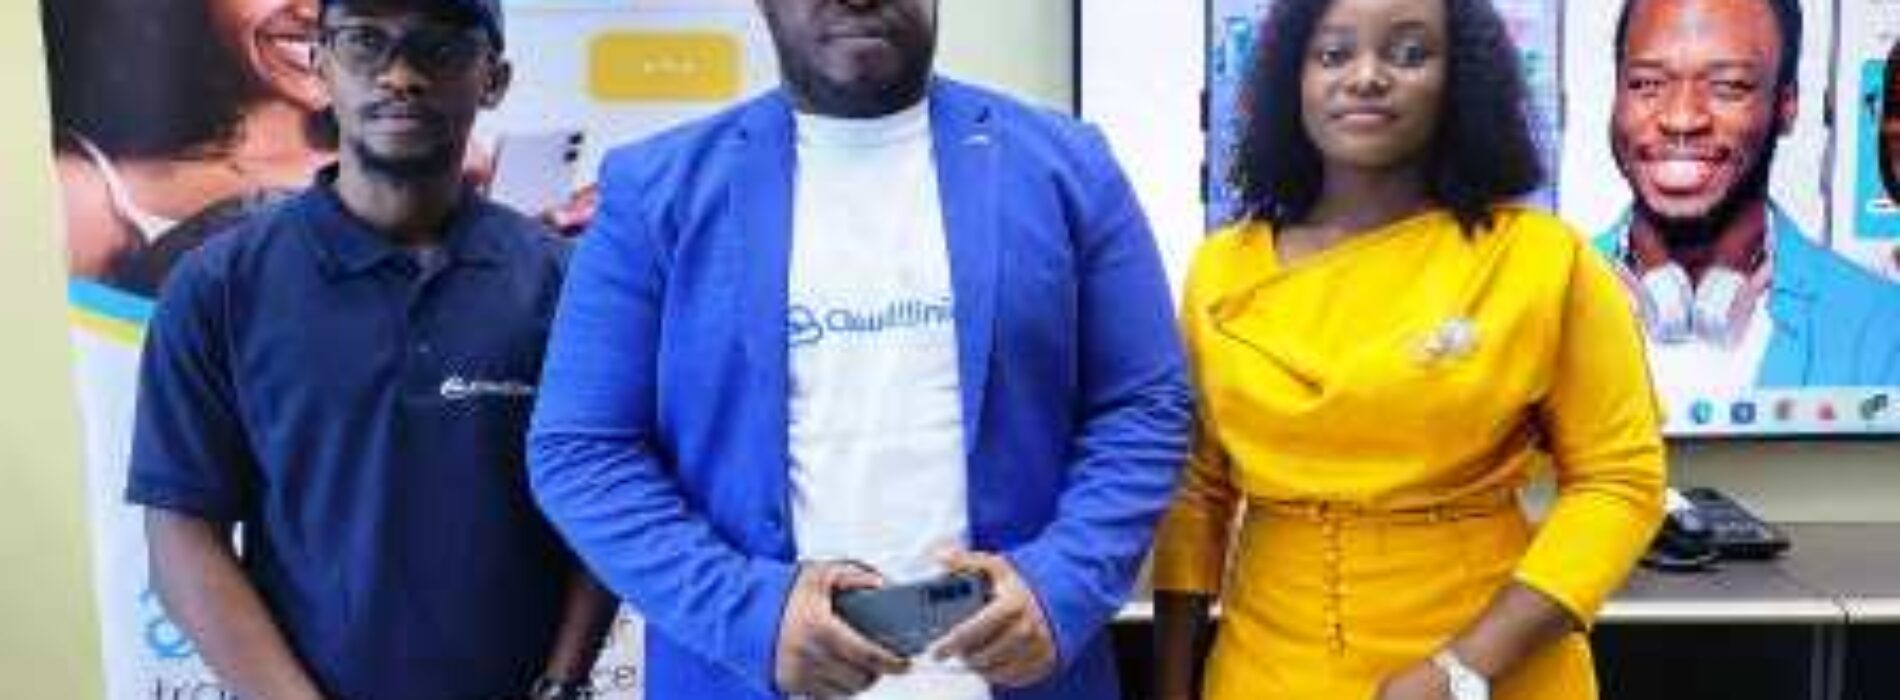 CloudClinic, unveils tech-enabled healthcare platform in Lagos